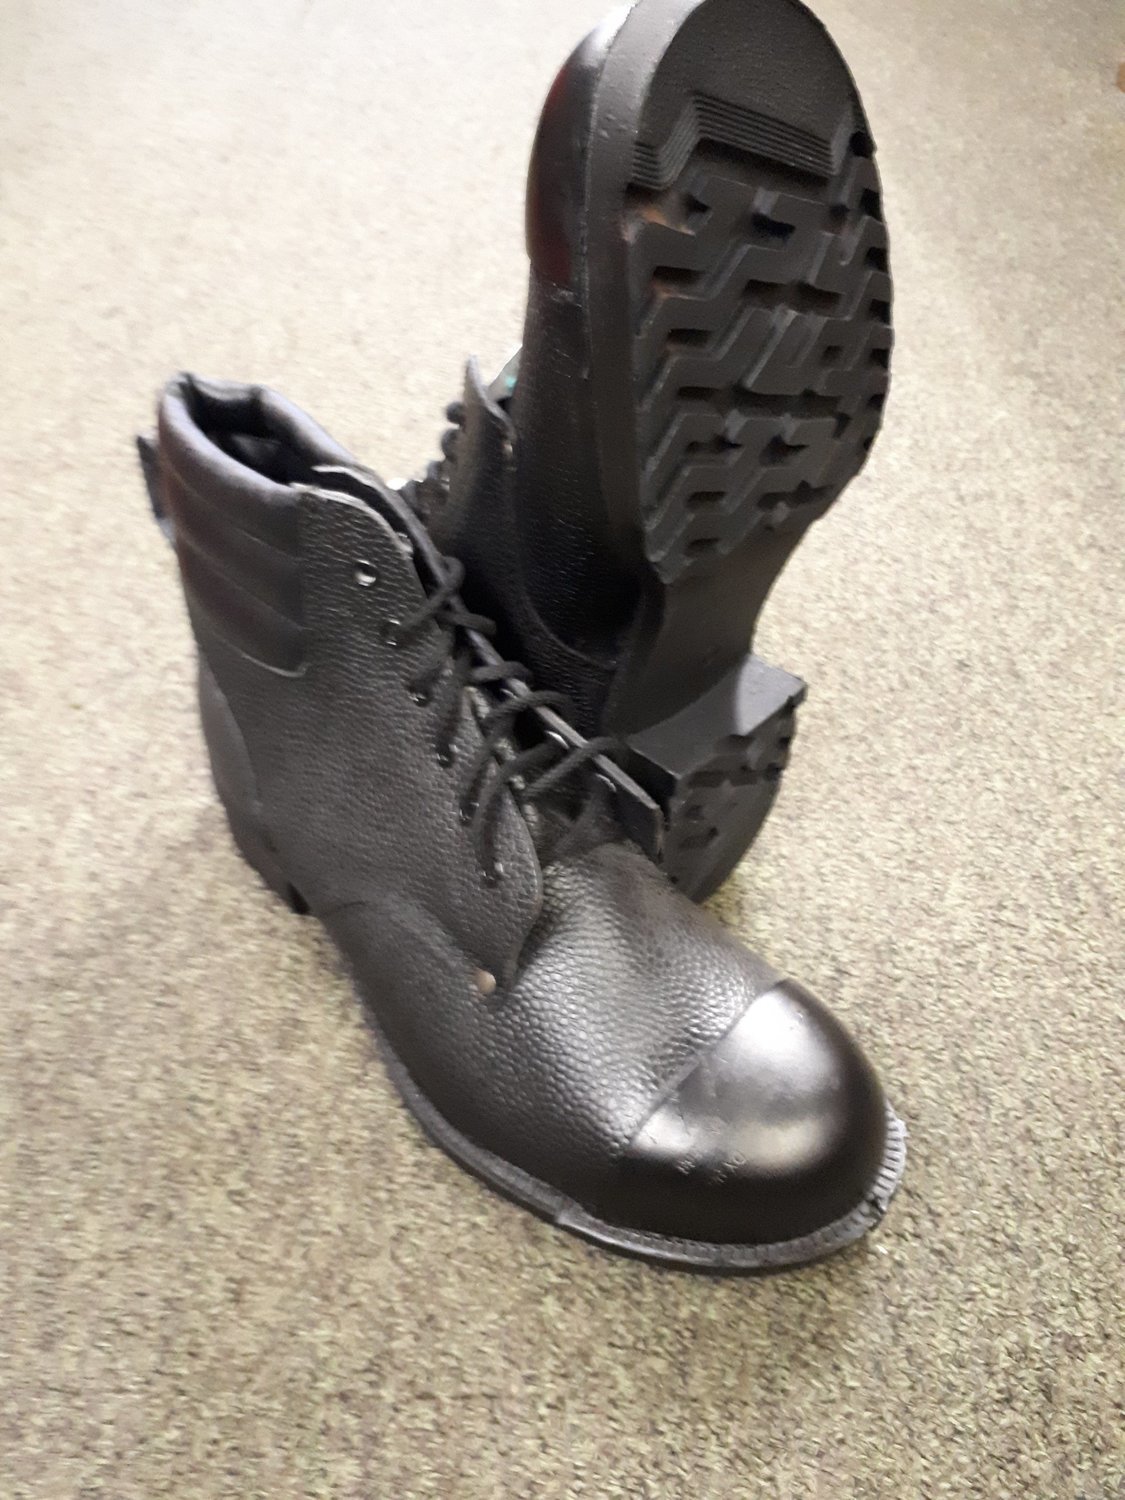 External Steel Toe Boots